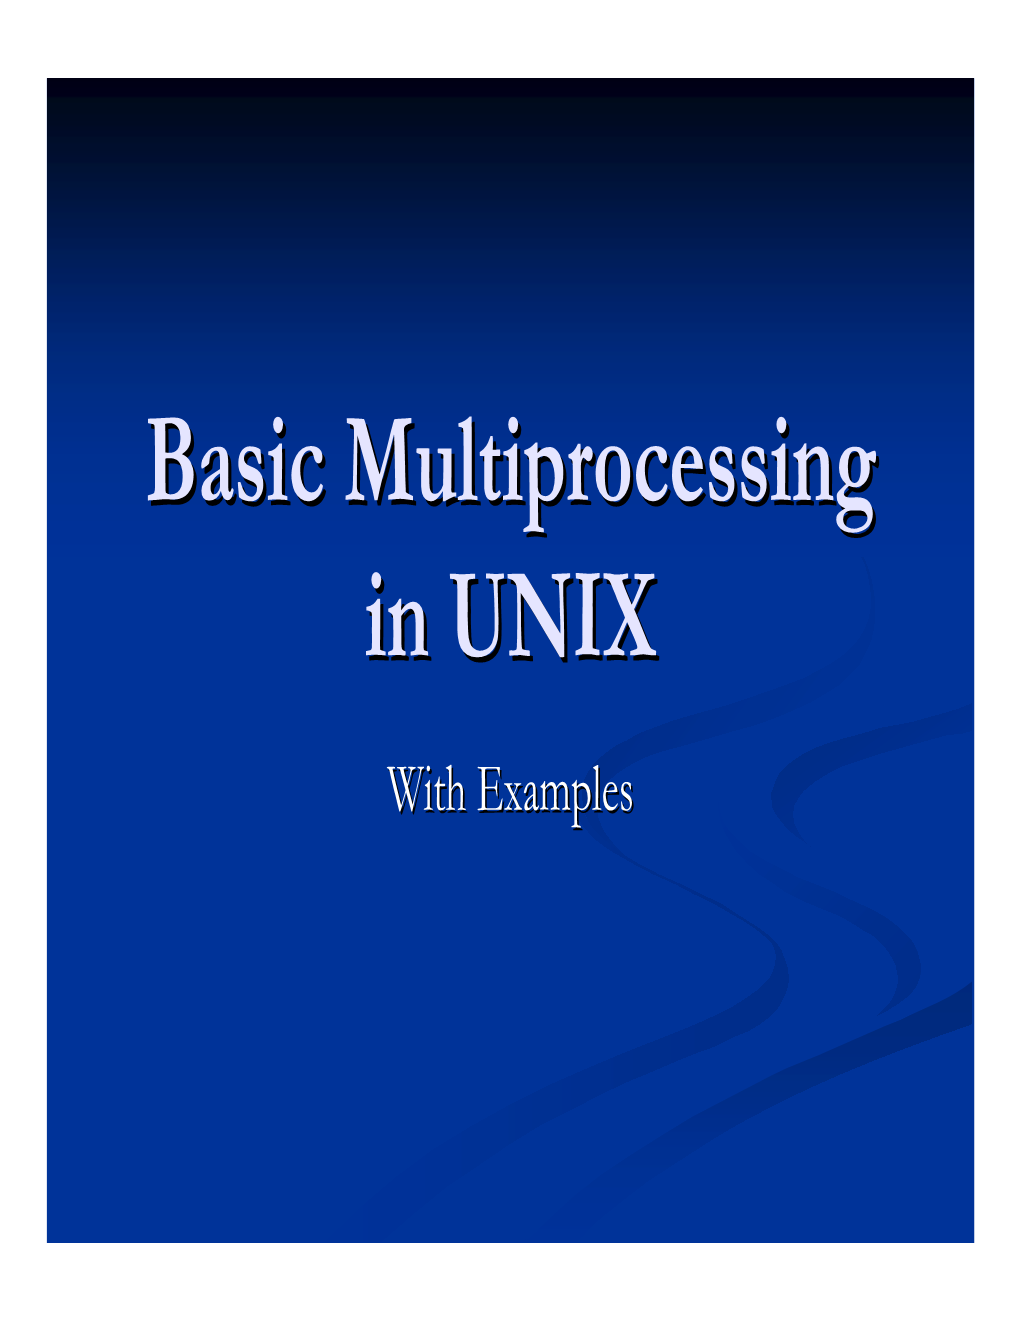 Basic Multiprocessing in UNIX